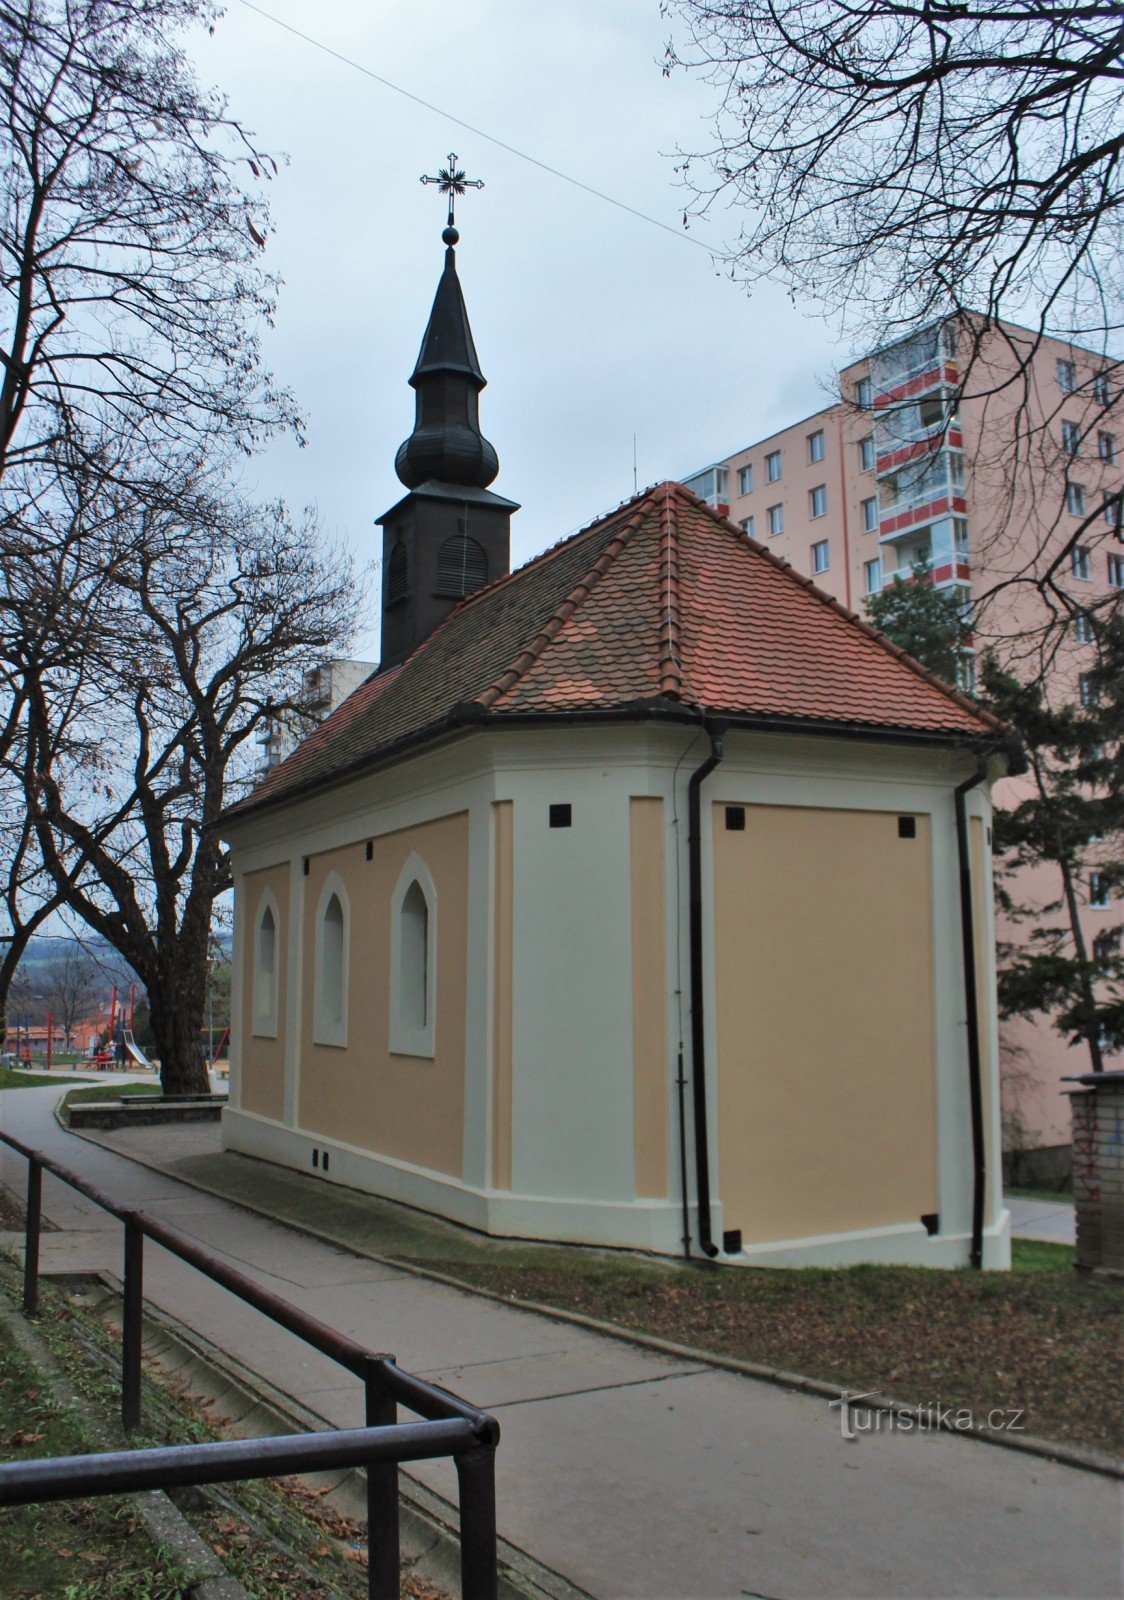 Brno-Bohunice - Pyhän Nikolauksen kappeli Cyril ja Methodius